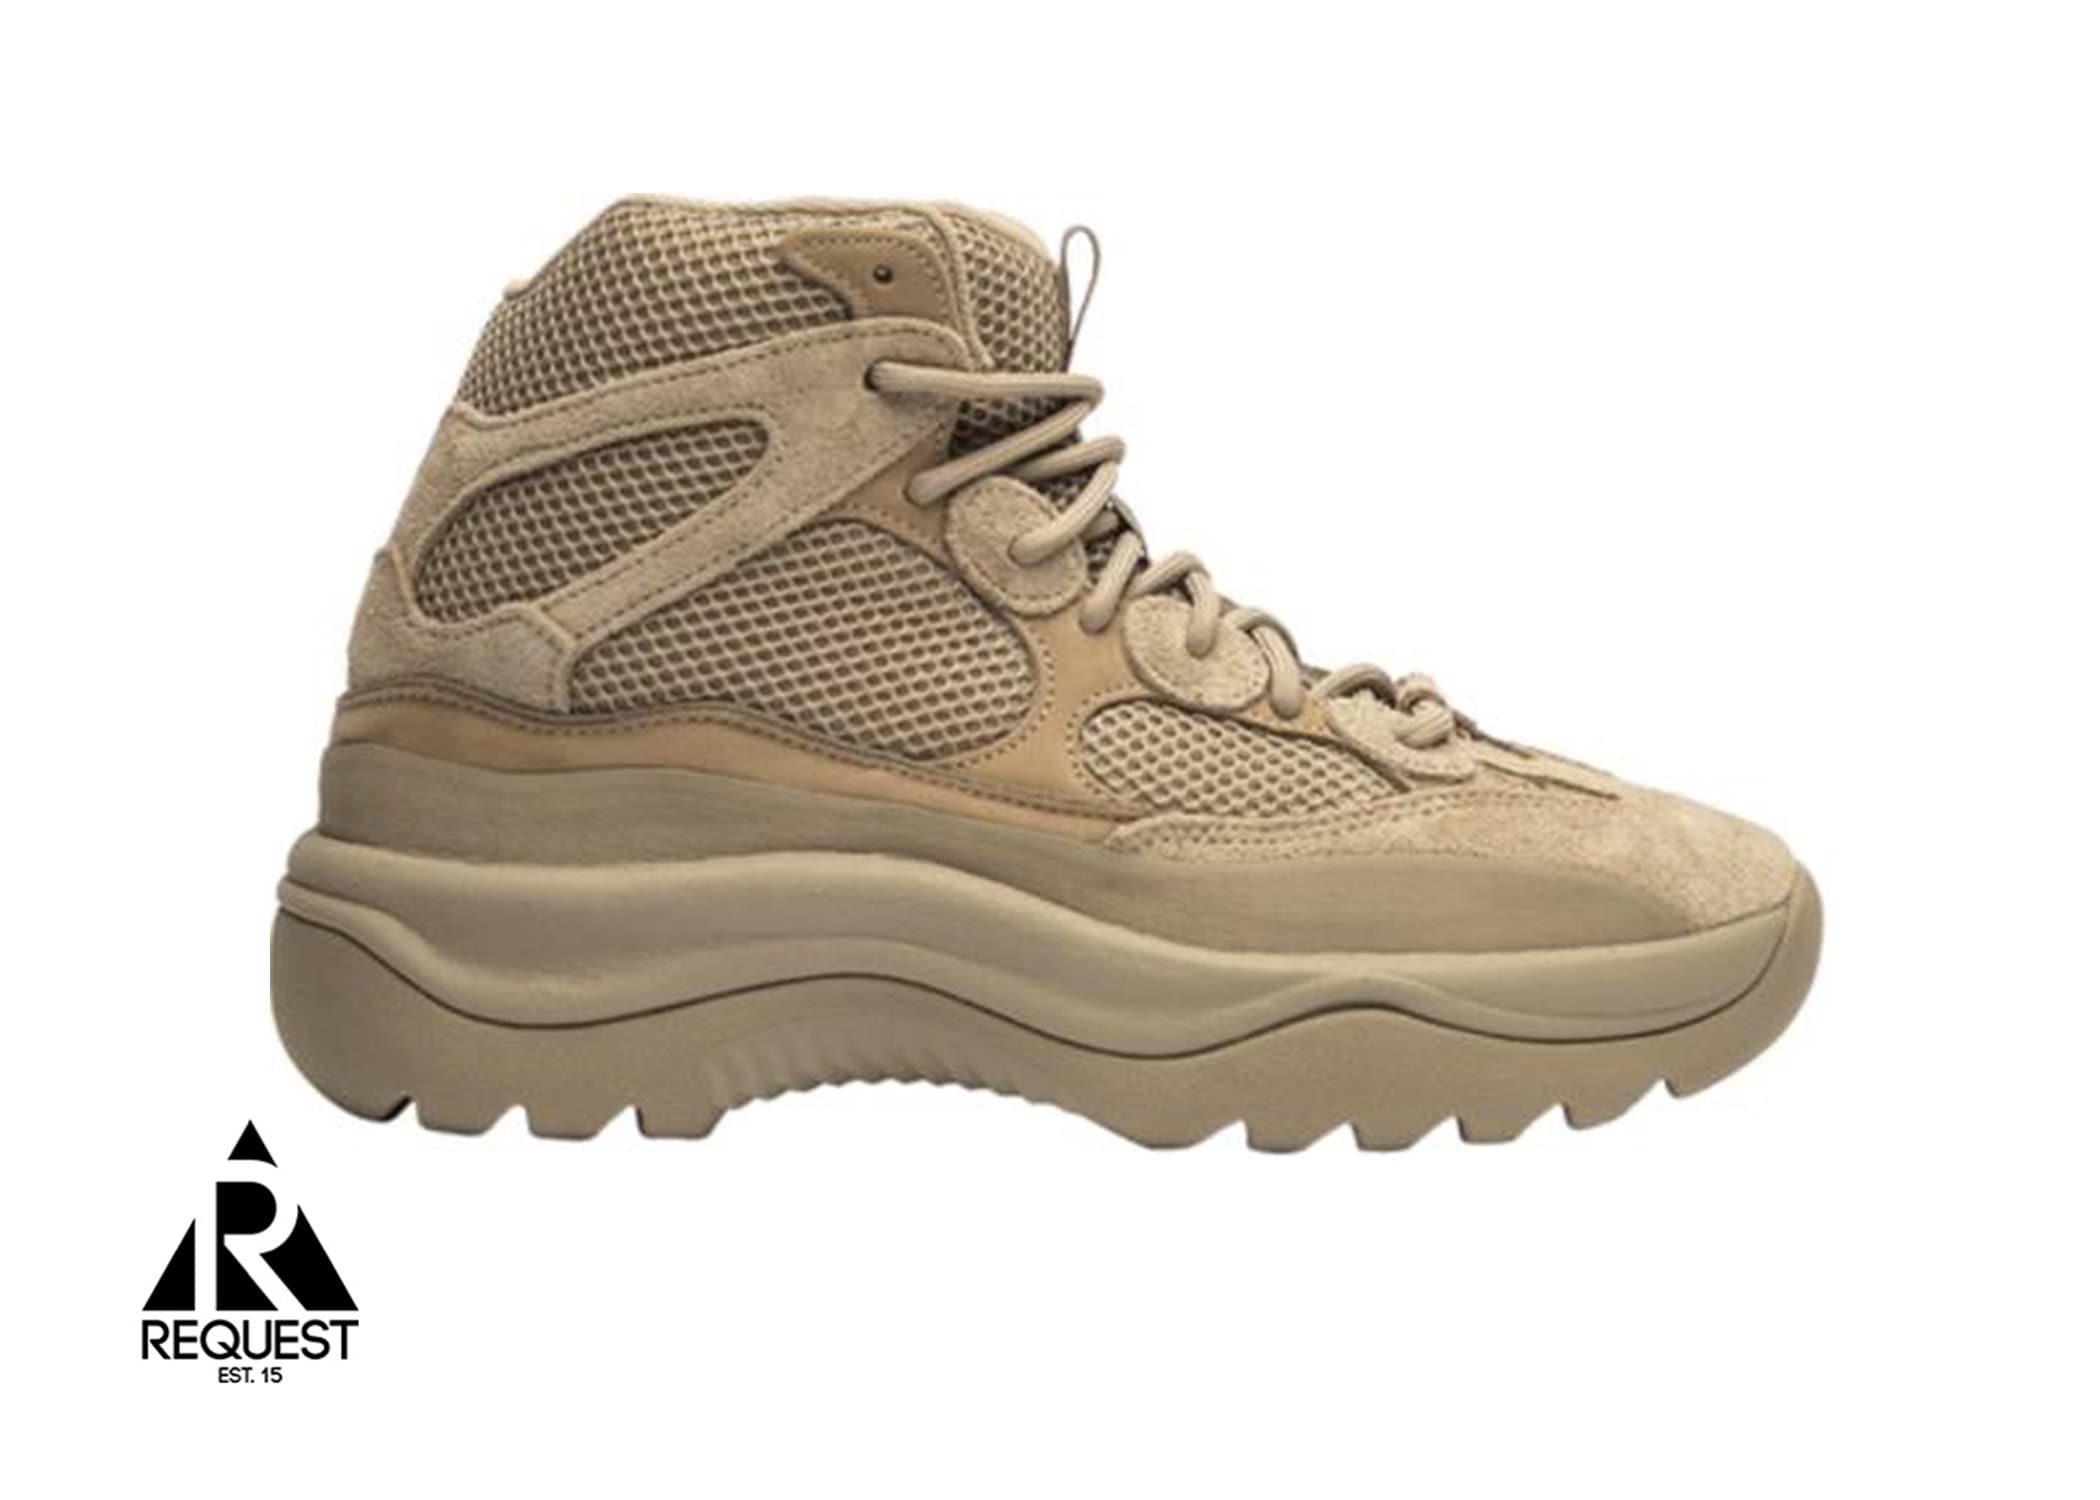 Yeezy Suede Desert Boot “Season Taupe”